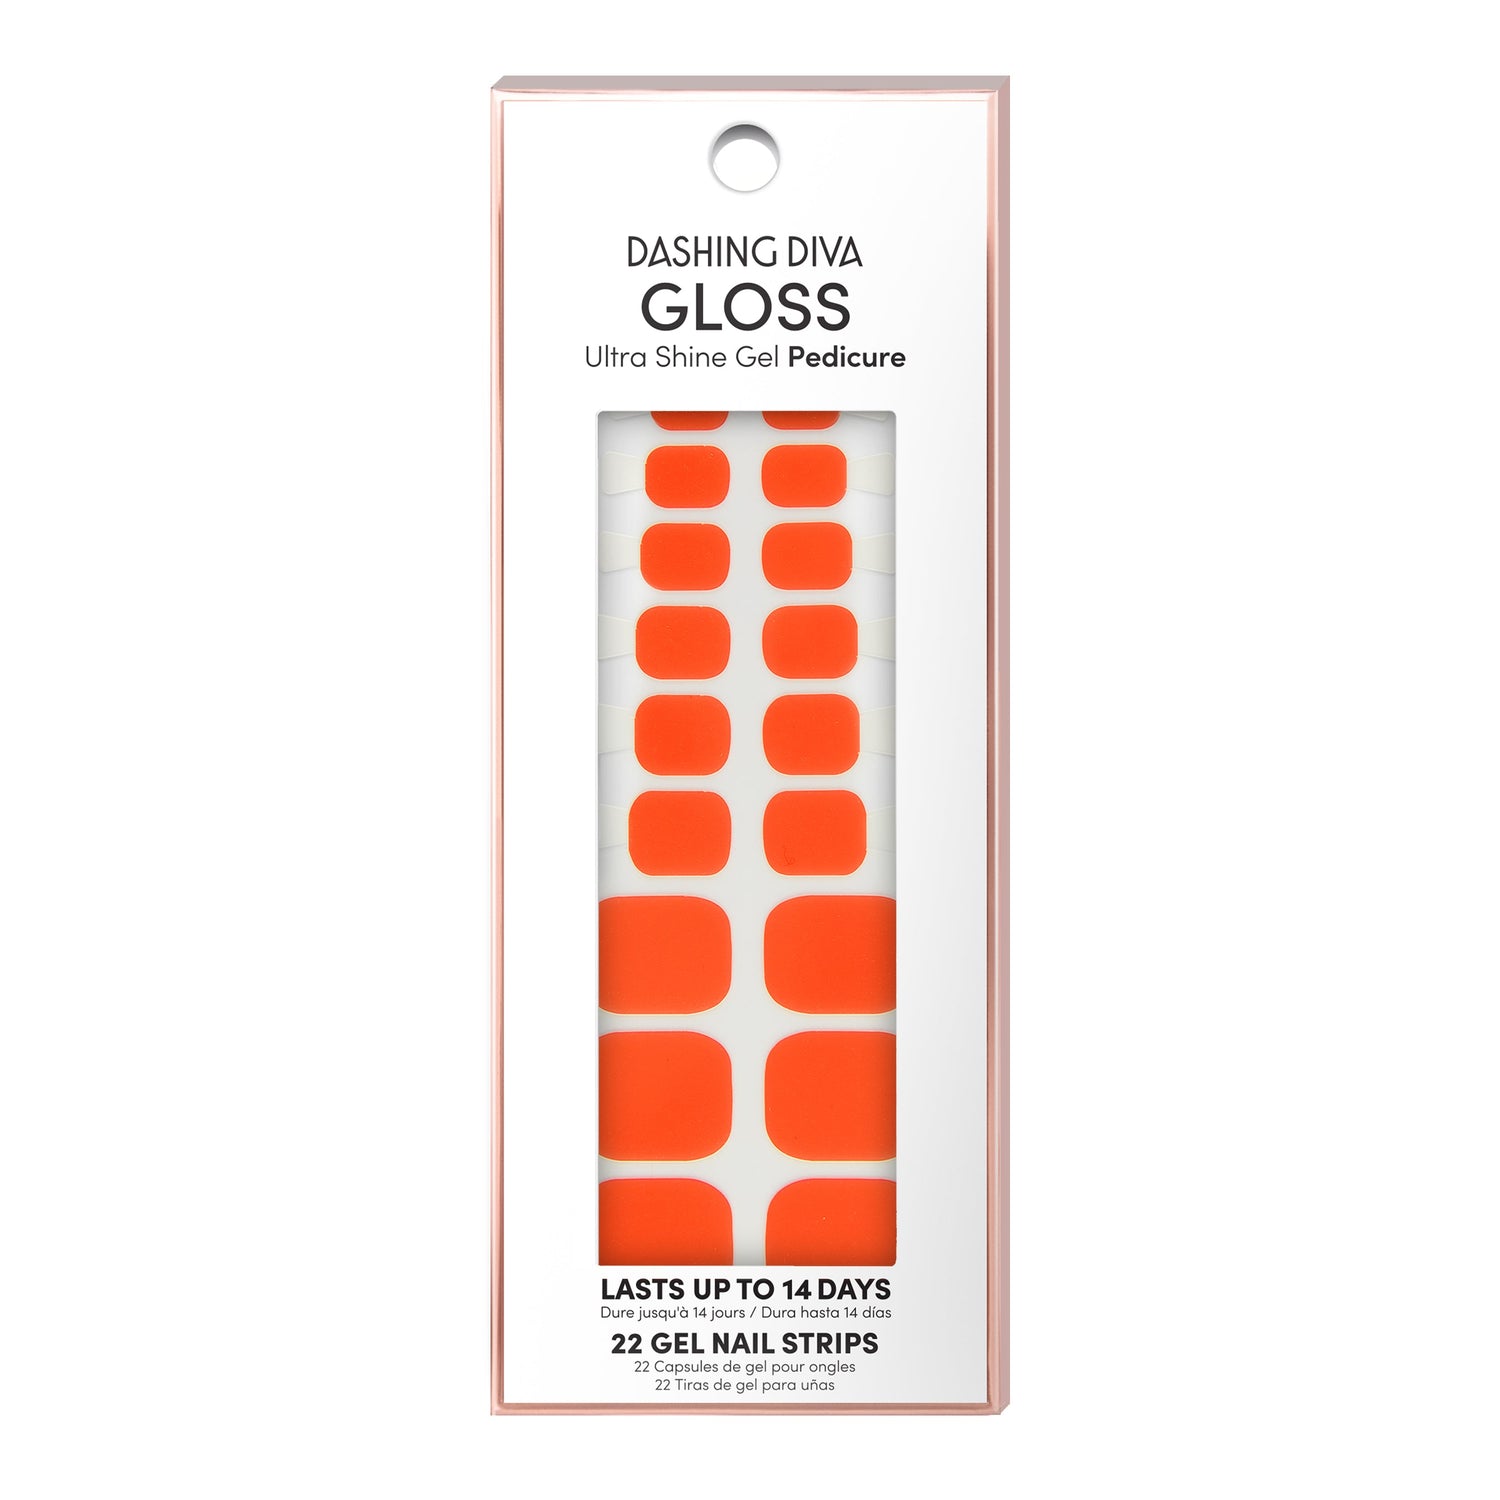 Dashing Diva GLOSS Pedicure bright orange gel nail strips.